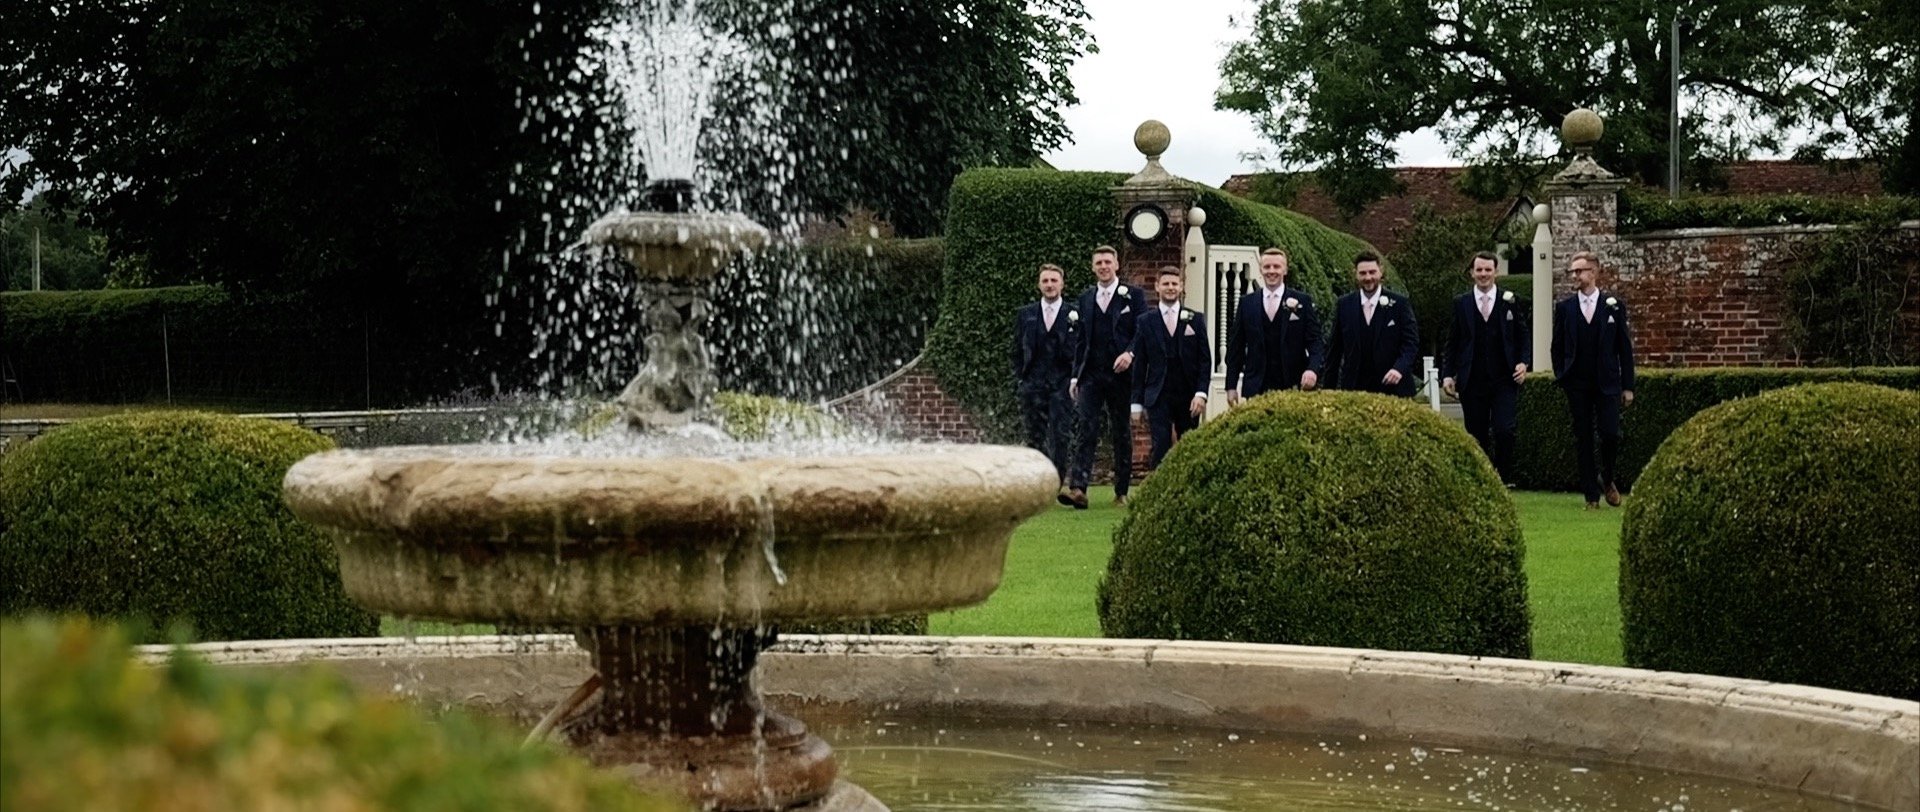 The groomsmen arrive at Quendon Hall - wedding video - 3 Cheers Media.jpg